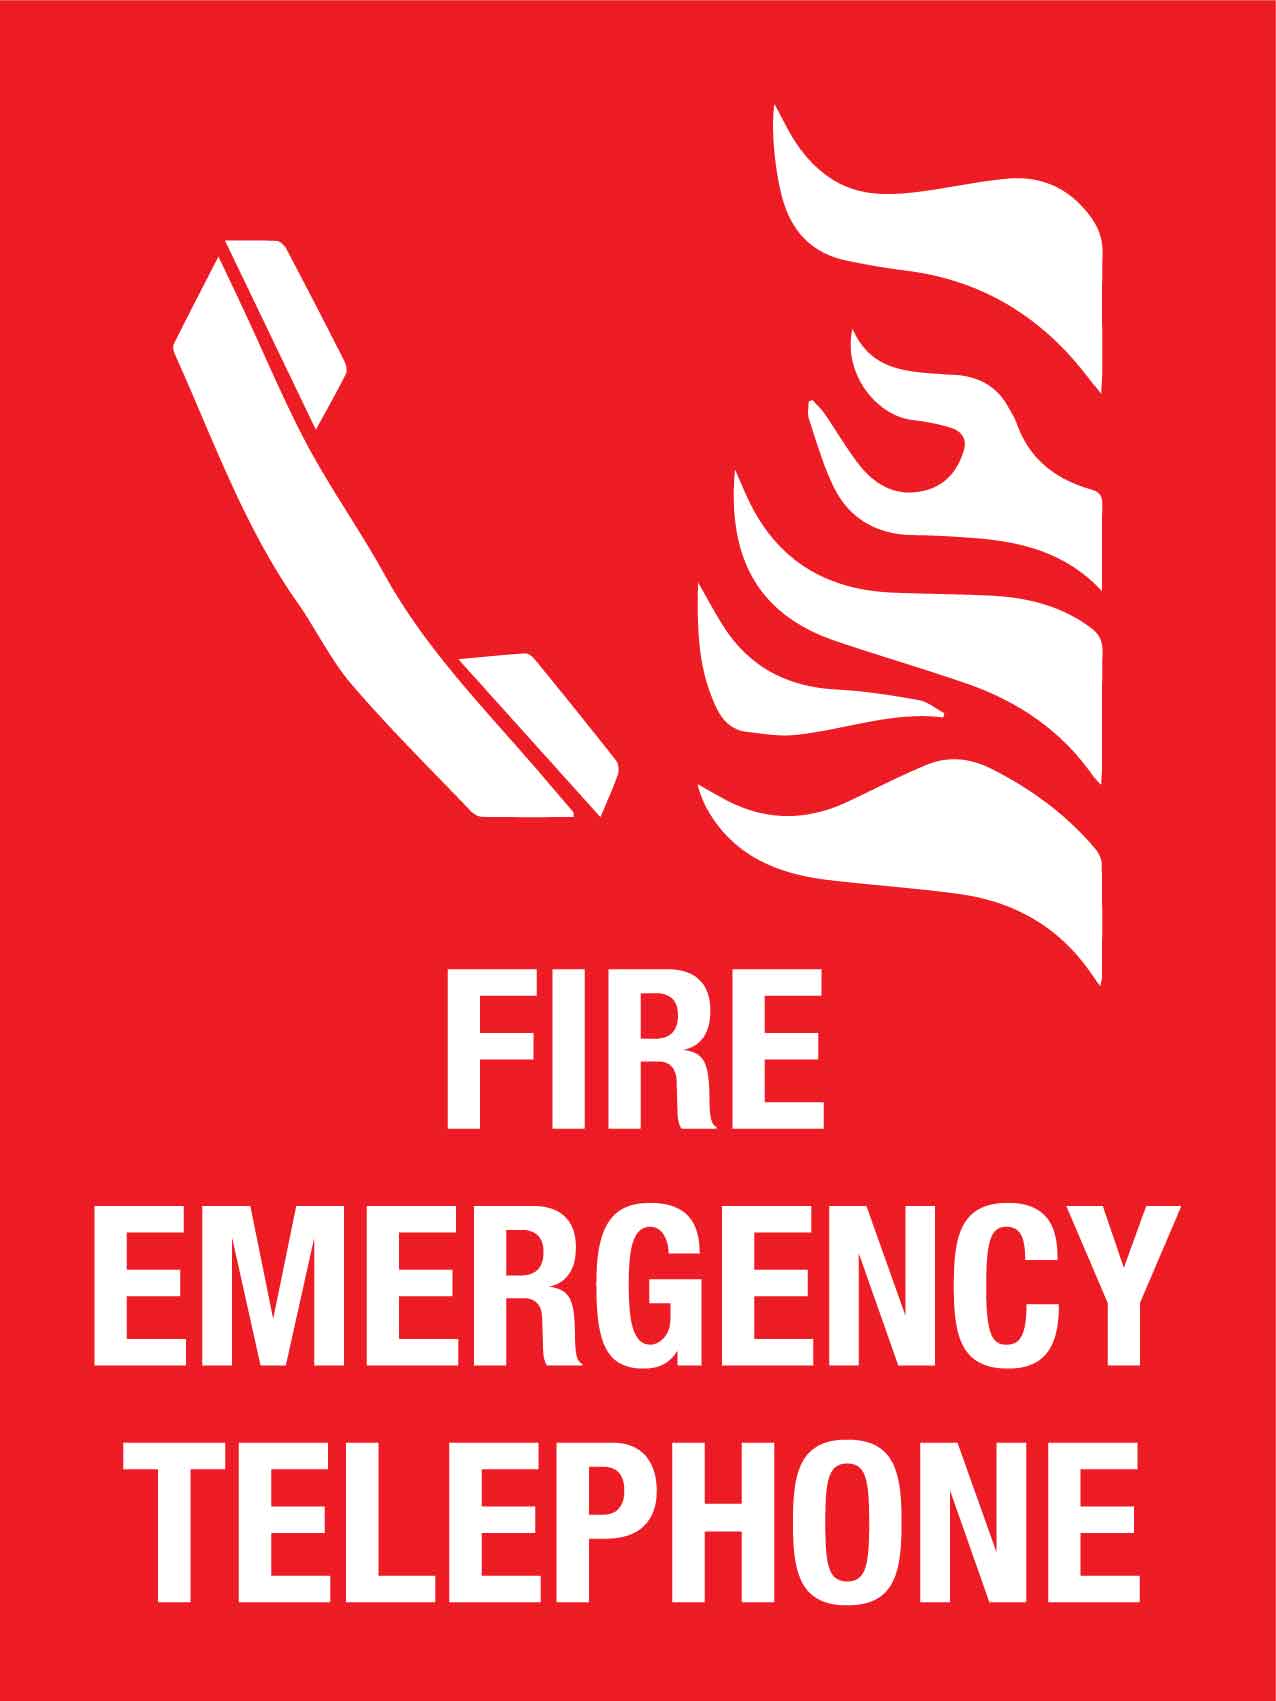 Fire Emergency Telephone Sign